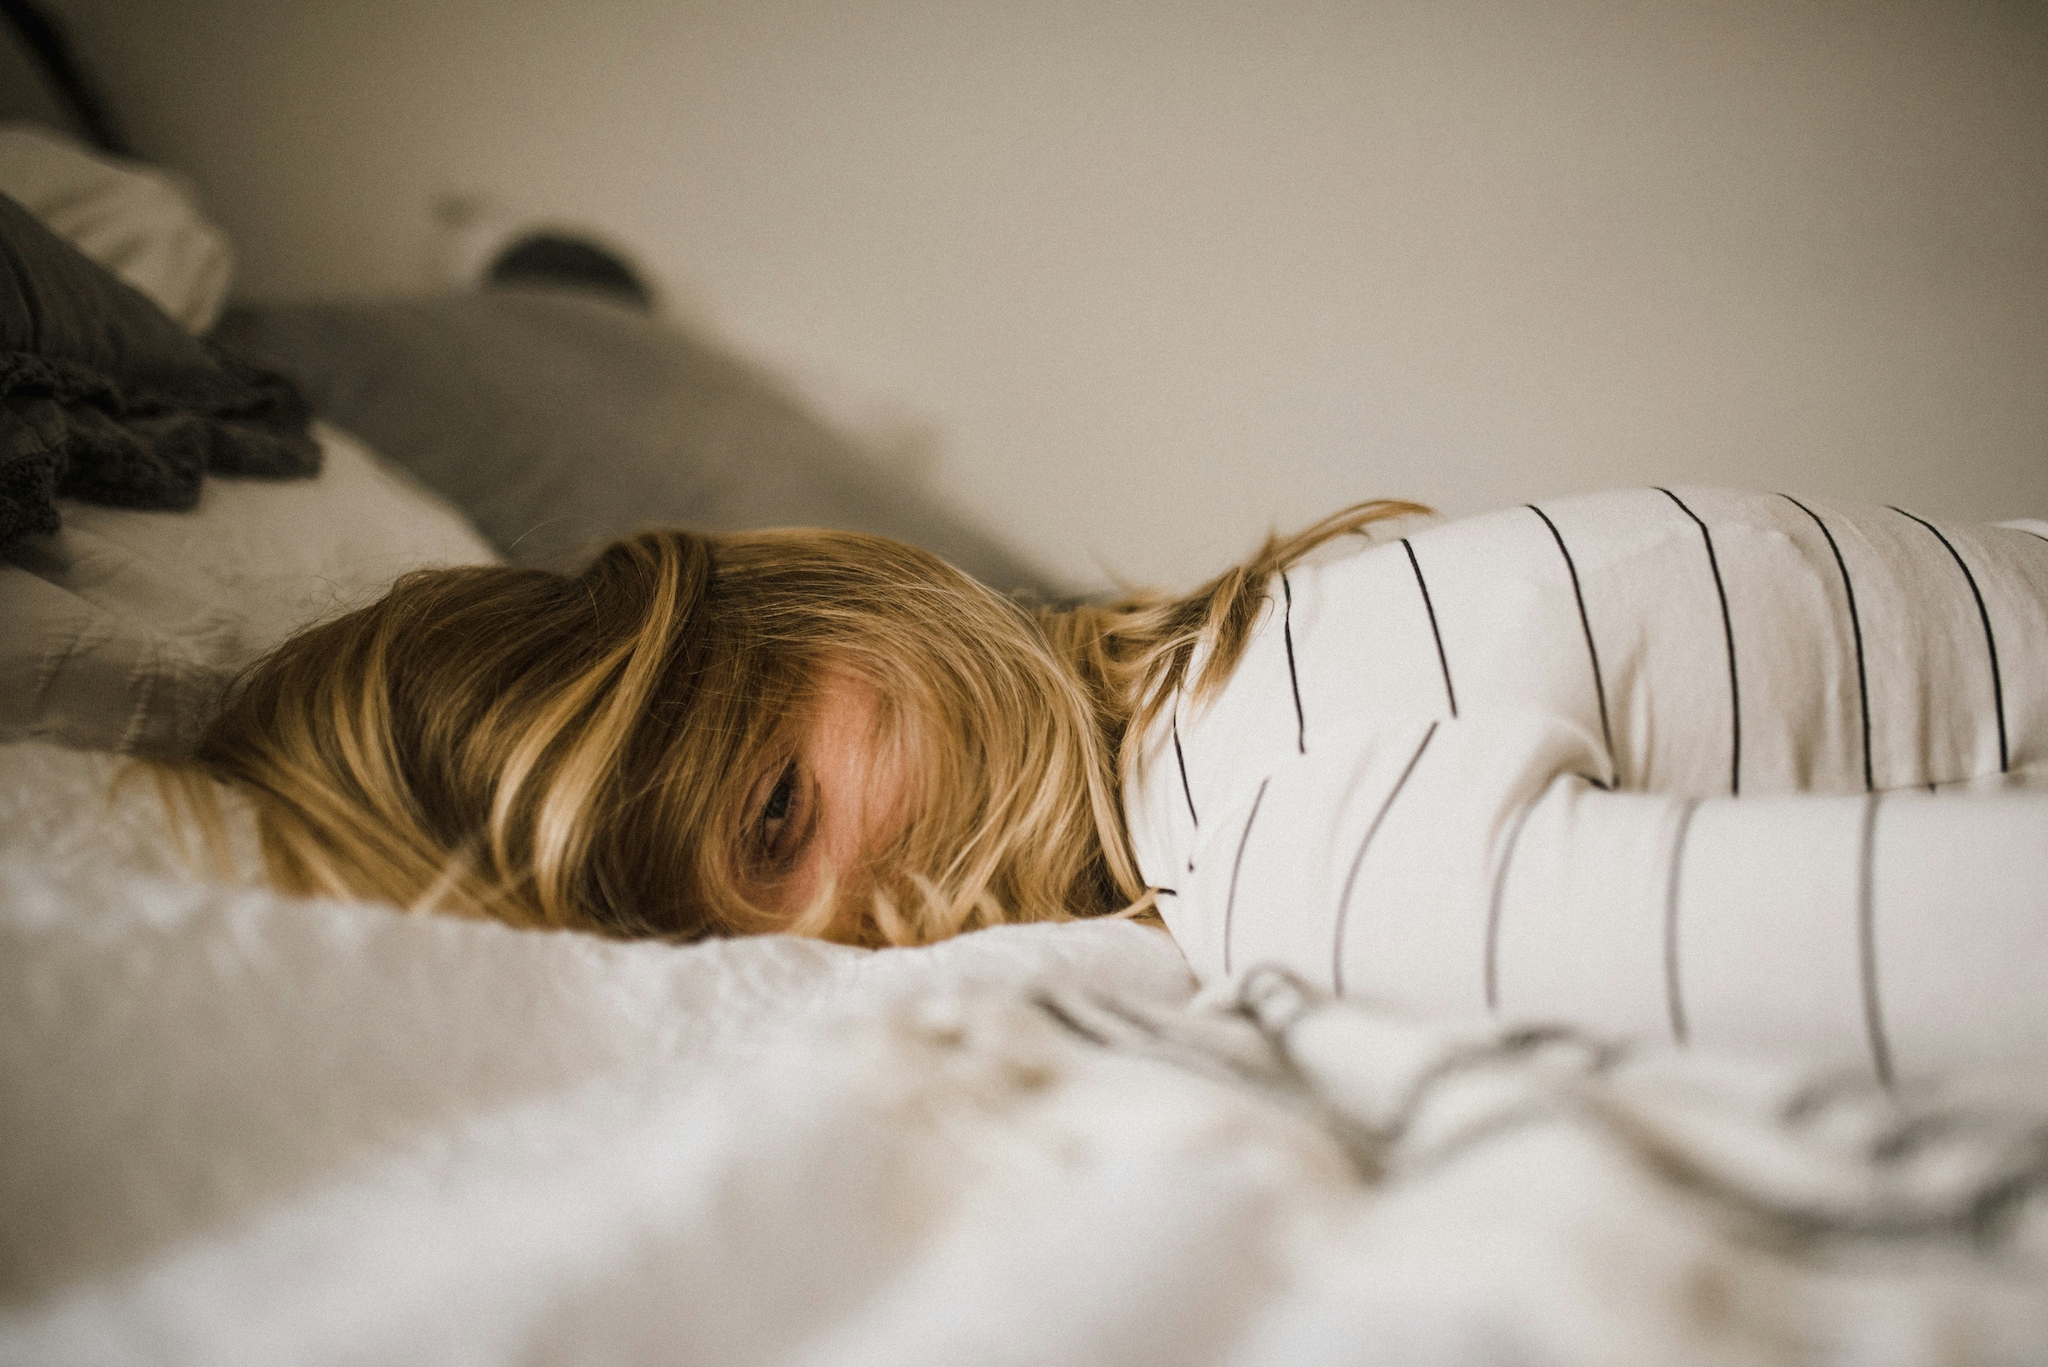 10 expert tips for sleeping well